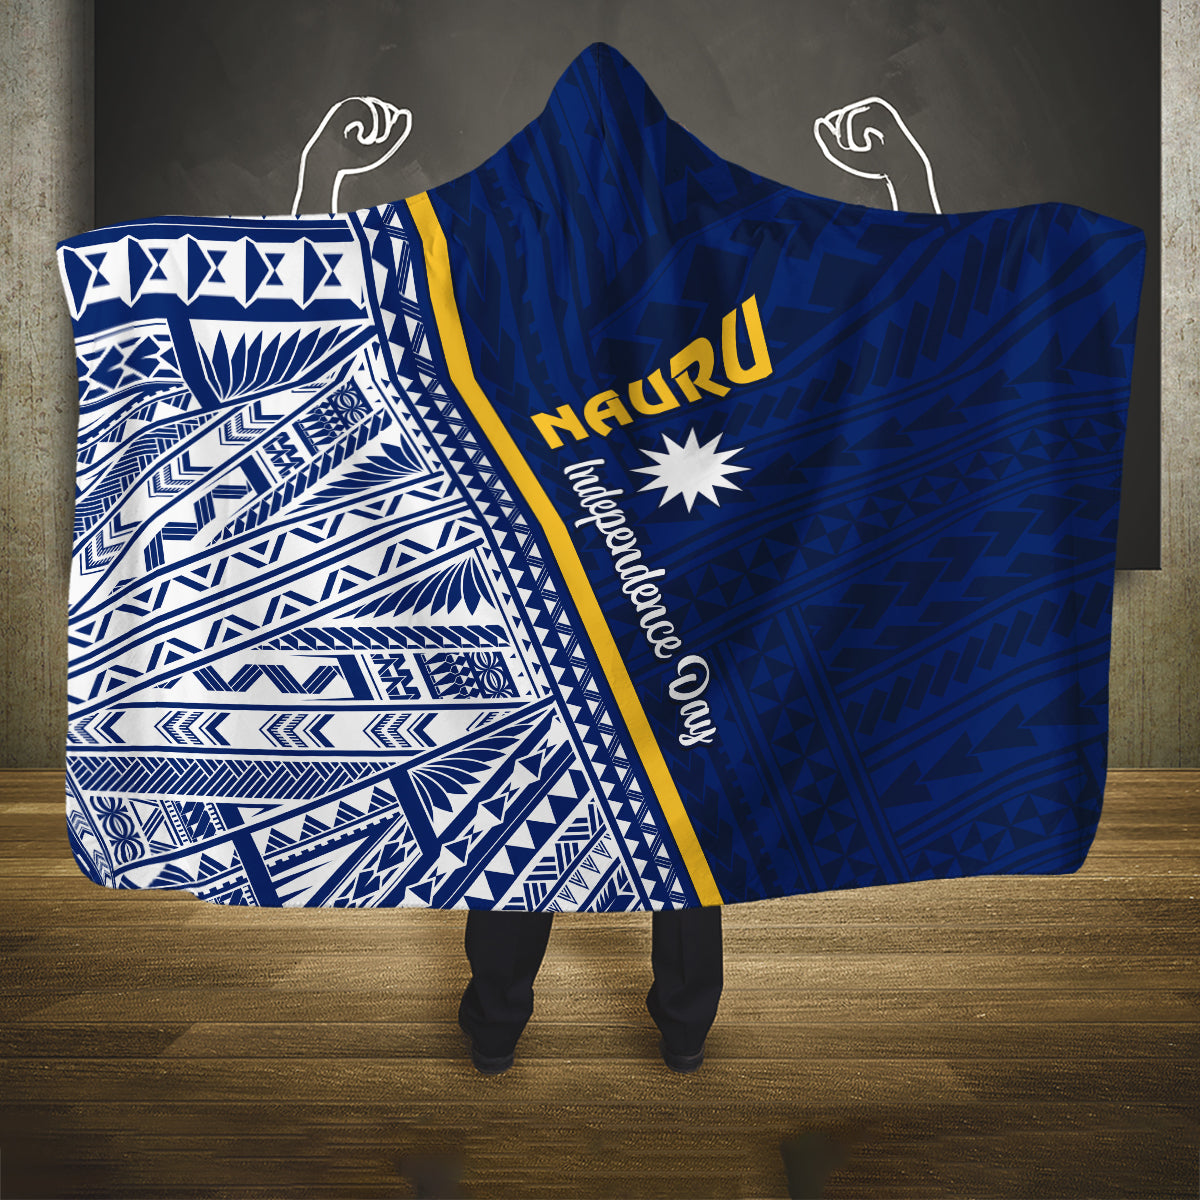 Nauru Independence Day Hooded Blanket Repubrikin Naoero Gods Will First LT01 One Size Blue - Polynesian Pride